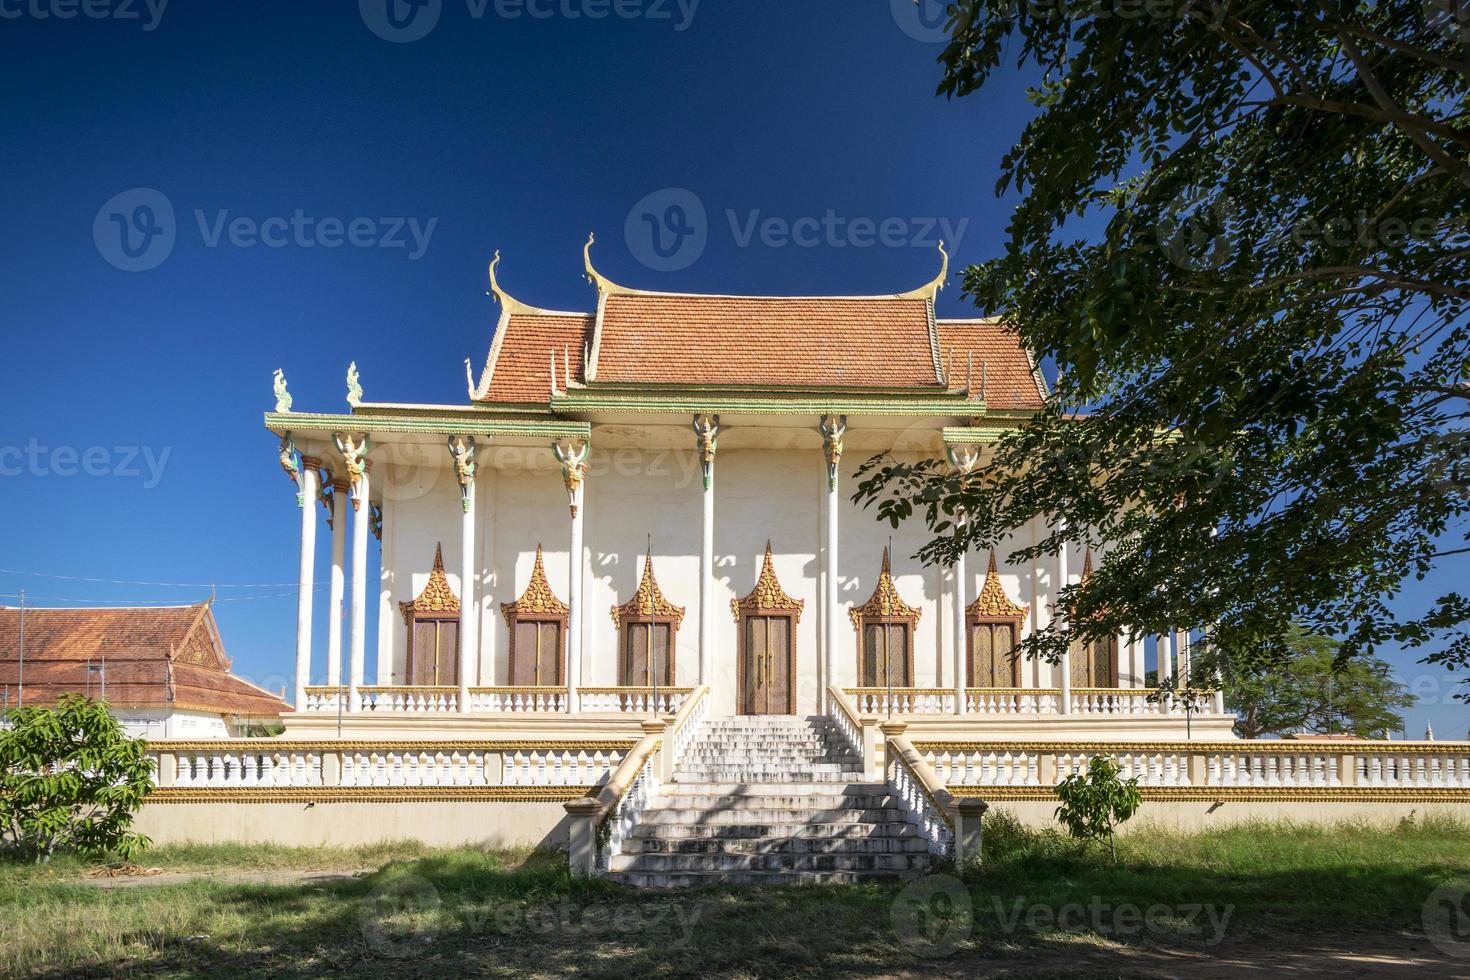 wat svay annat pagoda kandalprovinsen nära Phnom Penh Kambodja foto